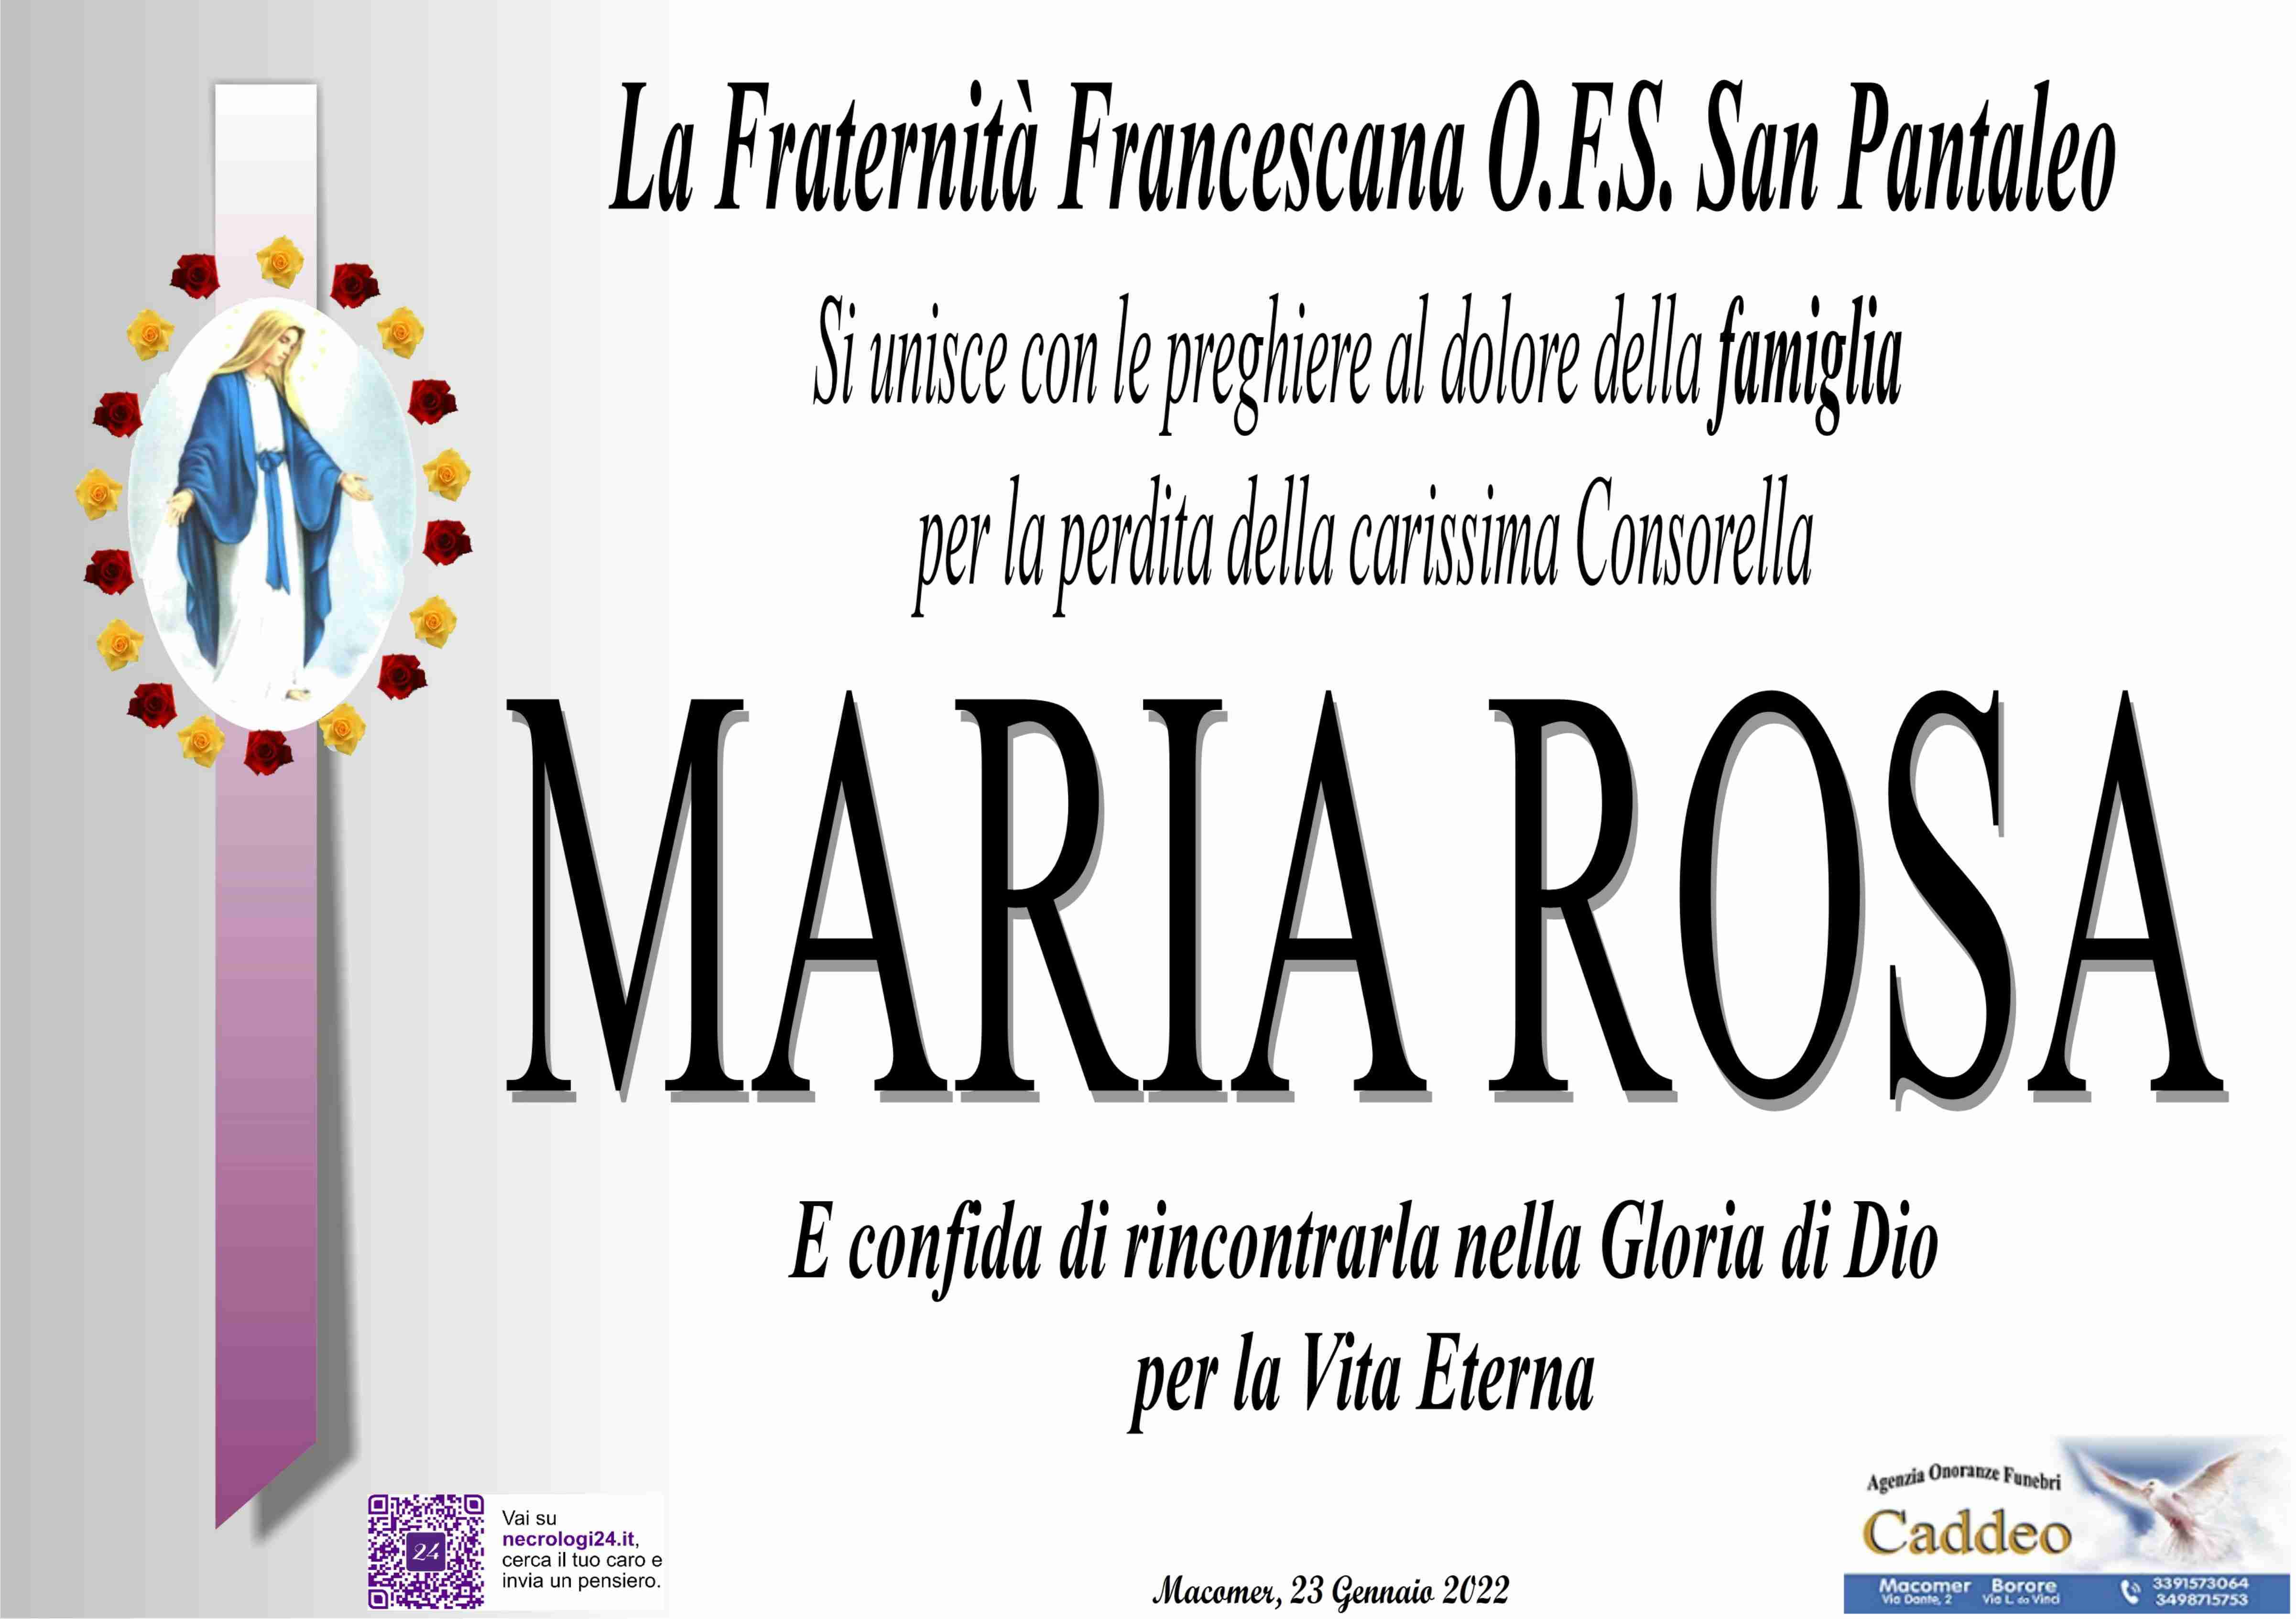 Maria Rosa Rossi